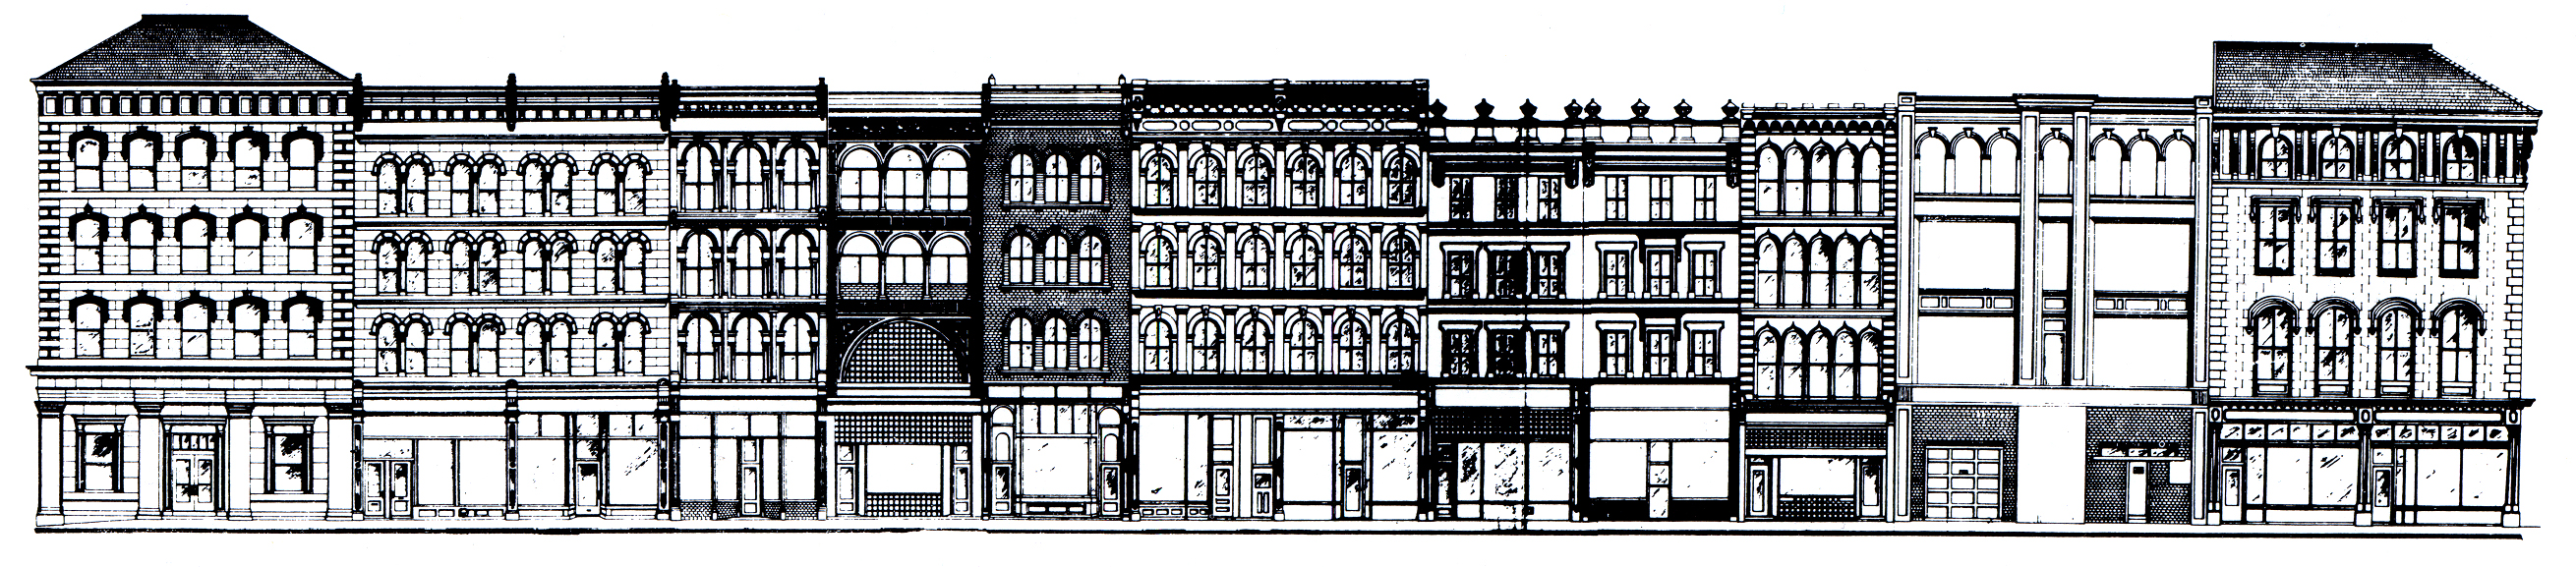 illustration of the Granvil buildings